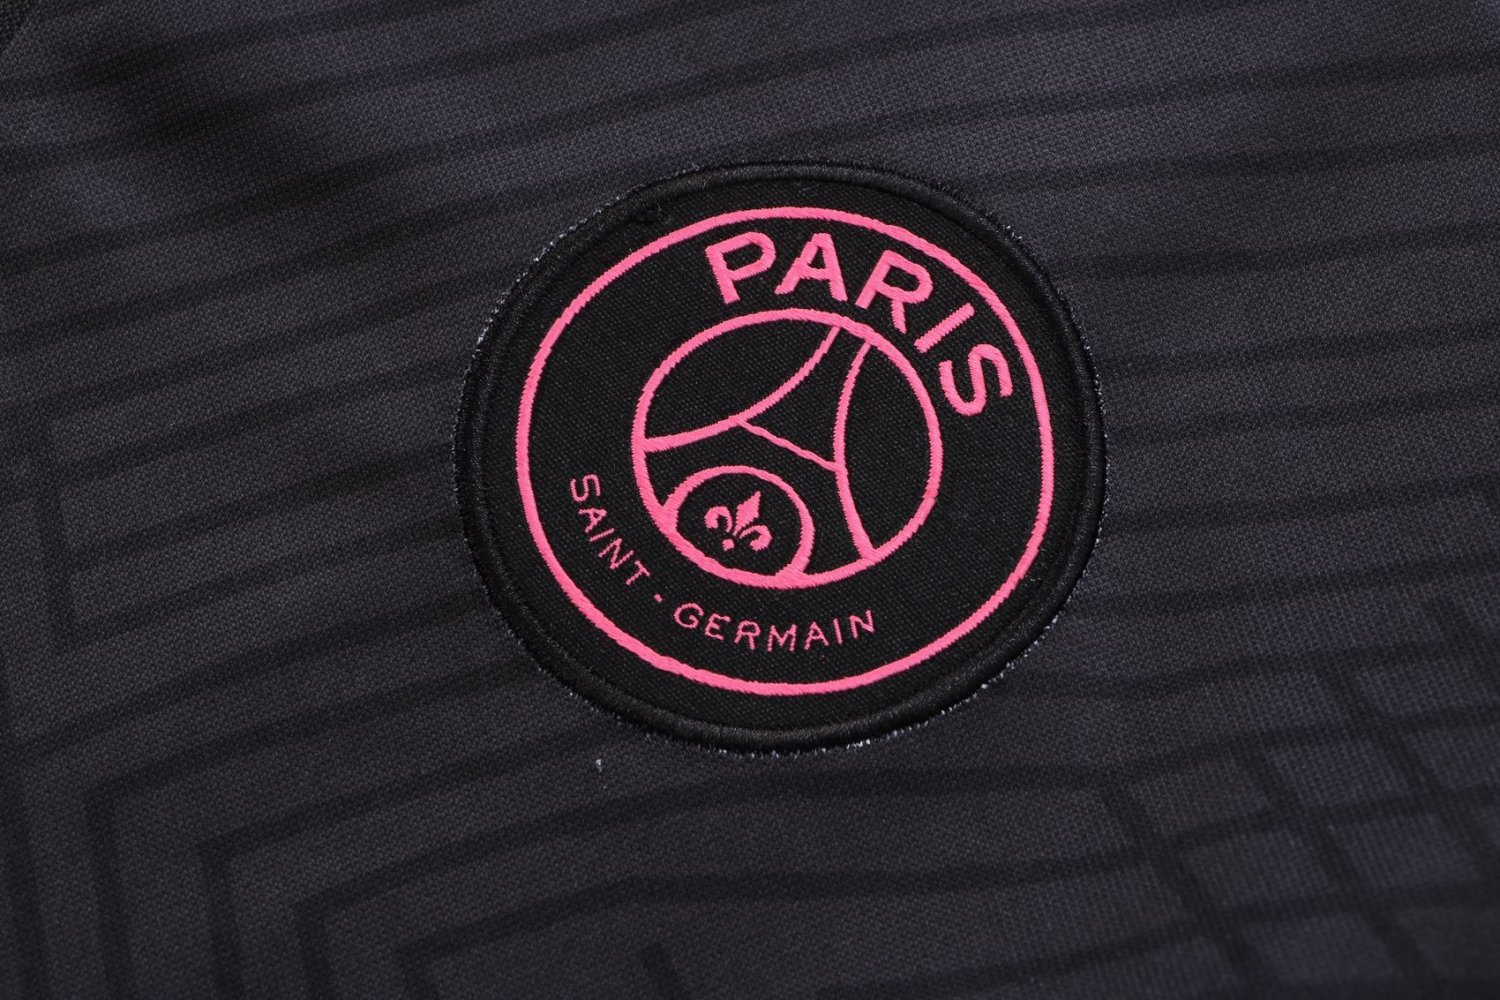 PSG x Jordan Soccer Training Suit Black 3D Print 2022/23 Mens